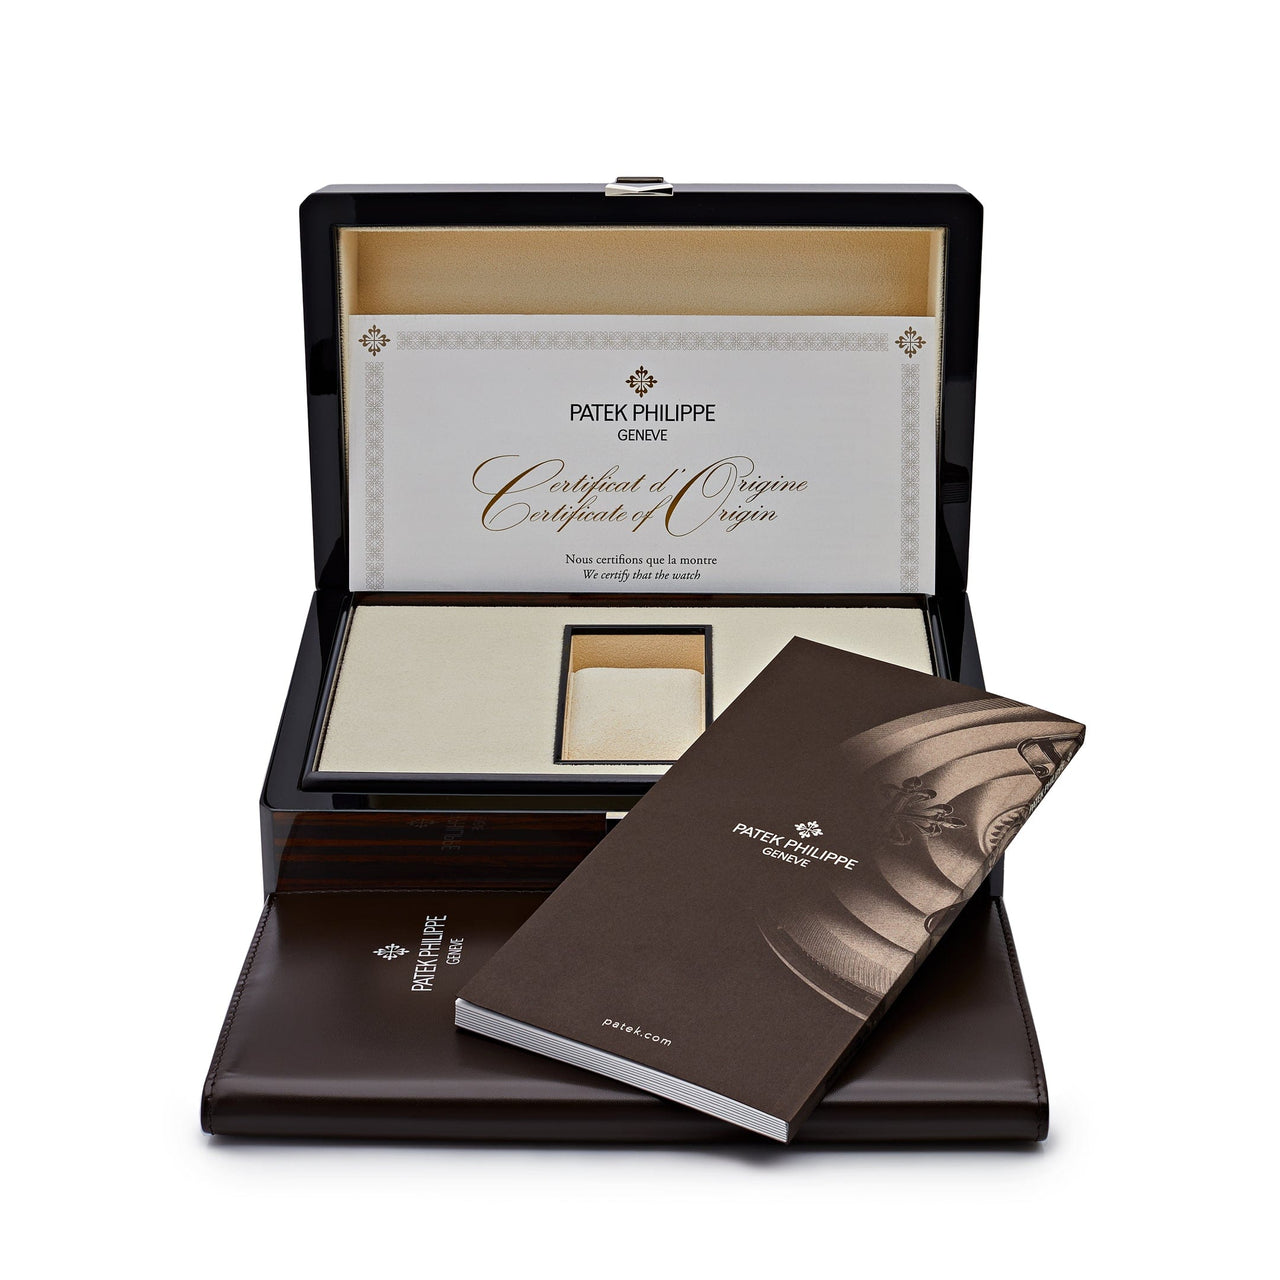 Luxury Watch Patek Philippe Chronograph White Gold Silver Dial 5070G-001 Wrist Aficionado